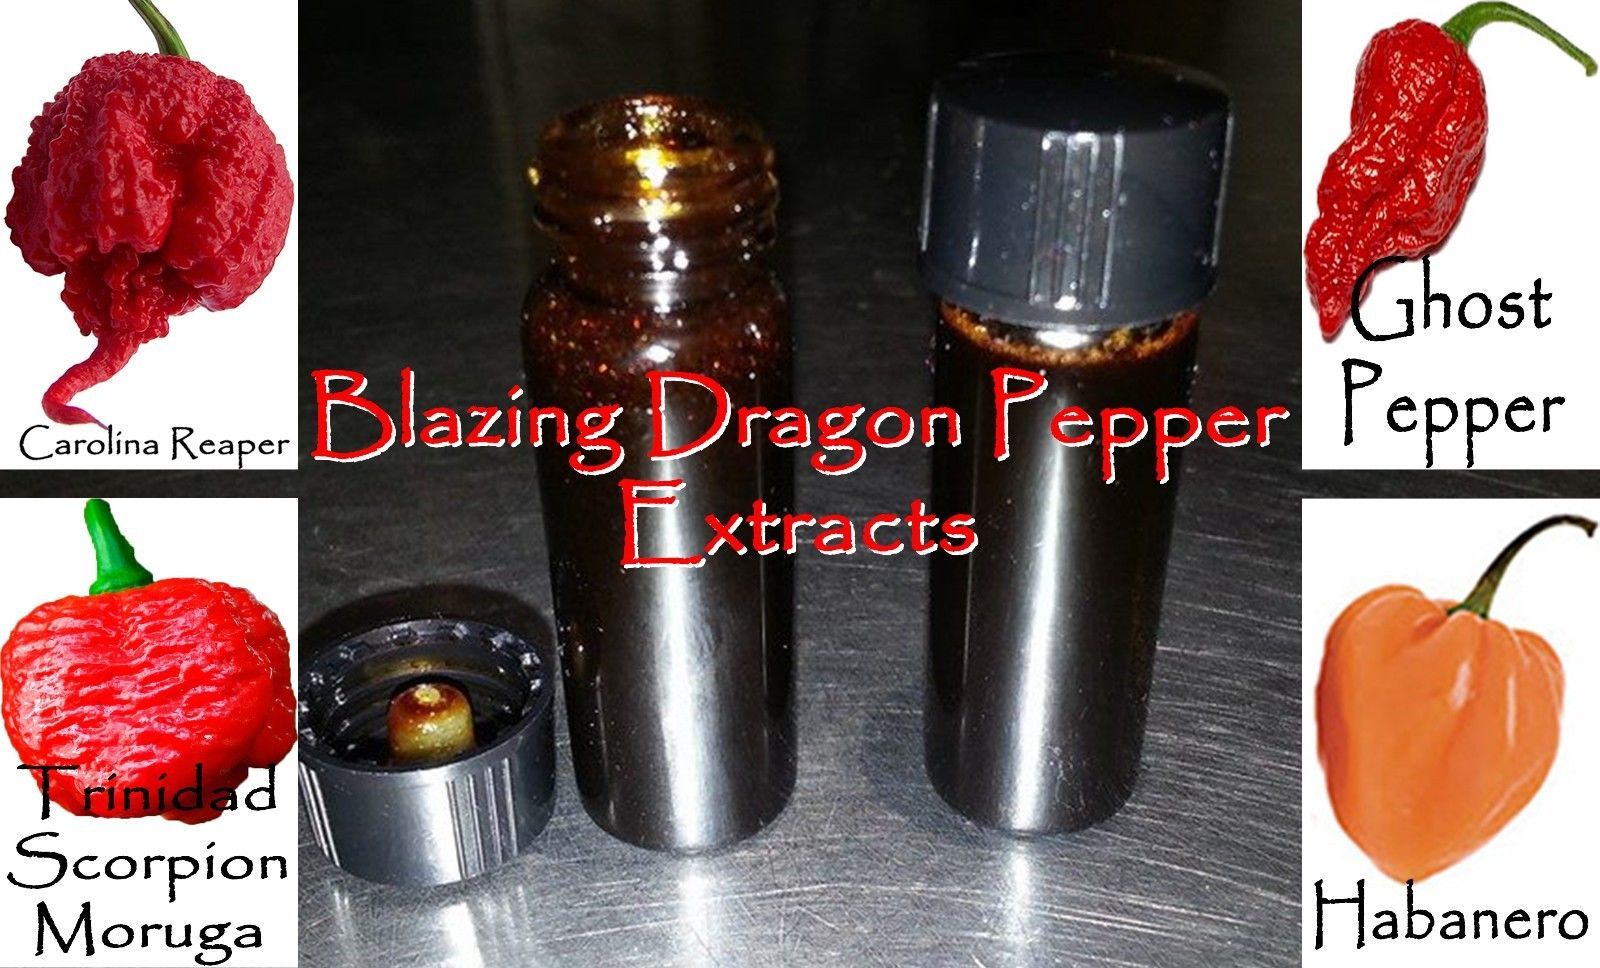 Organic Pepper Extract: Carolina Reaper/ Moruga Scorpion/ Ghost Pepper/ Habanero - $8.50 - $12.00